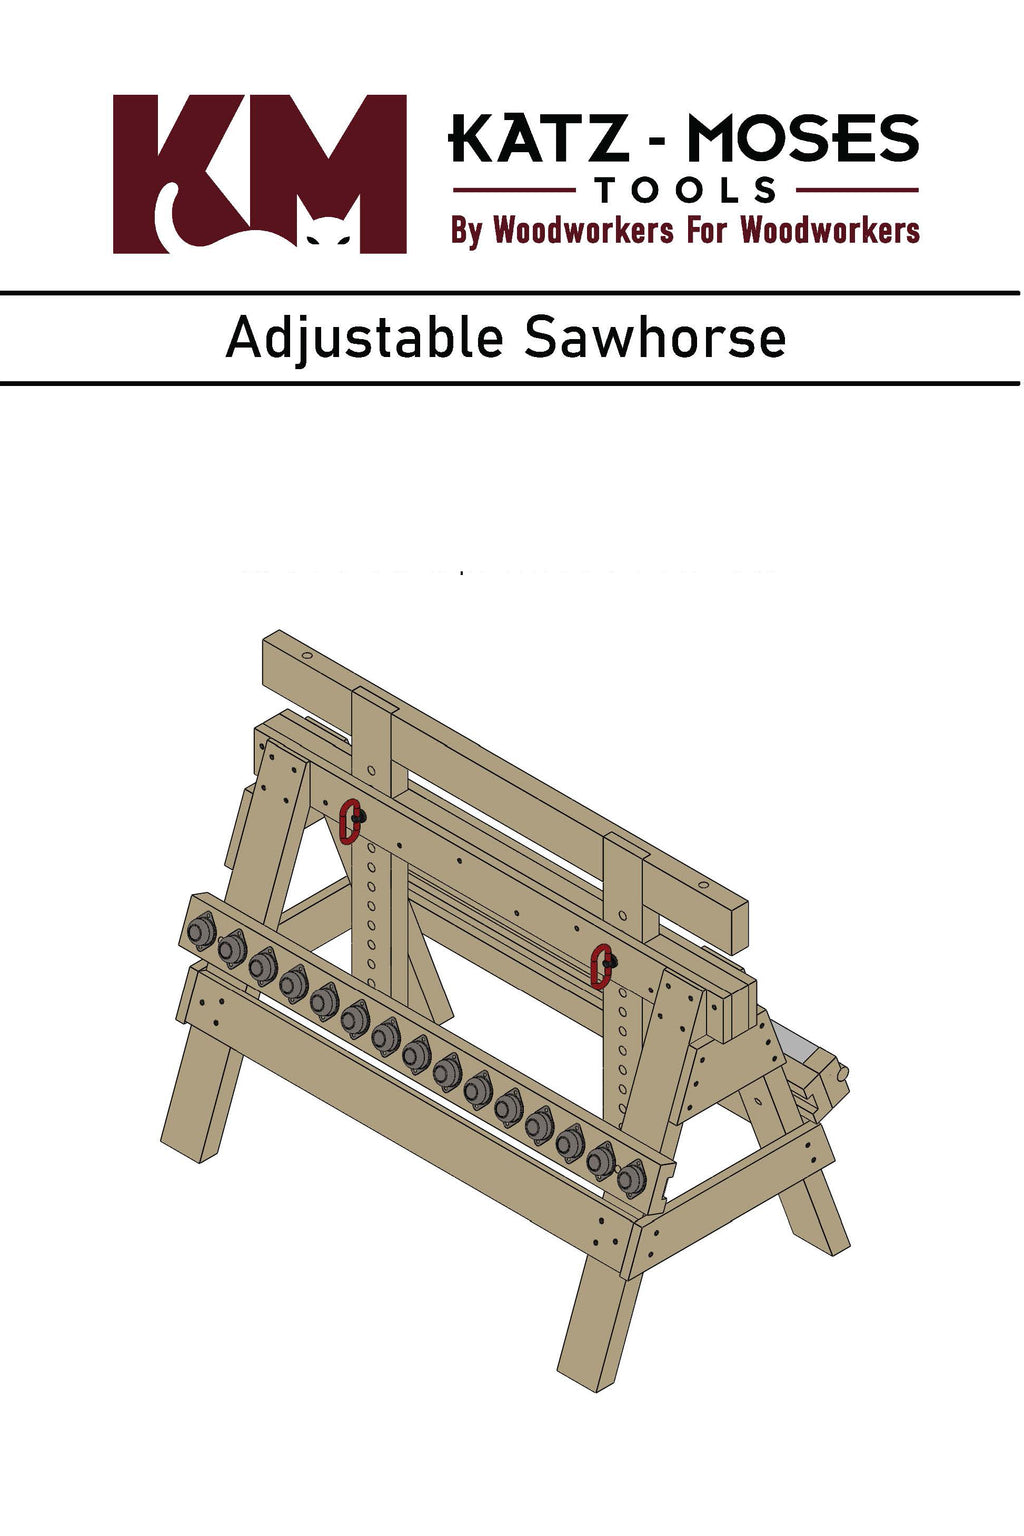 ULTIMATE Adjustable Sawhorse